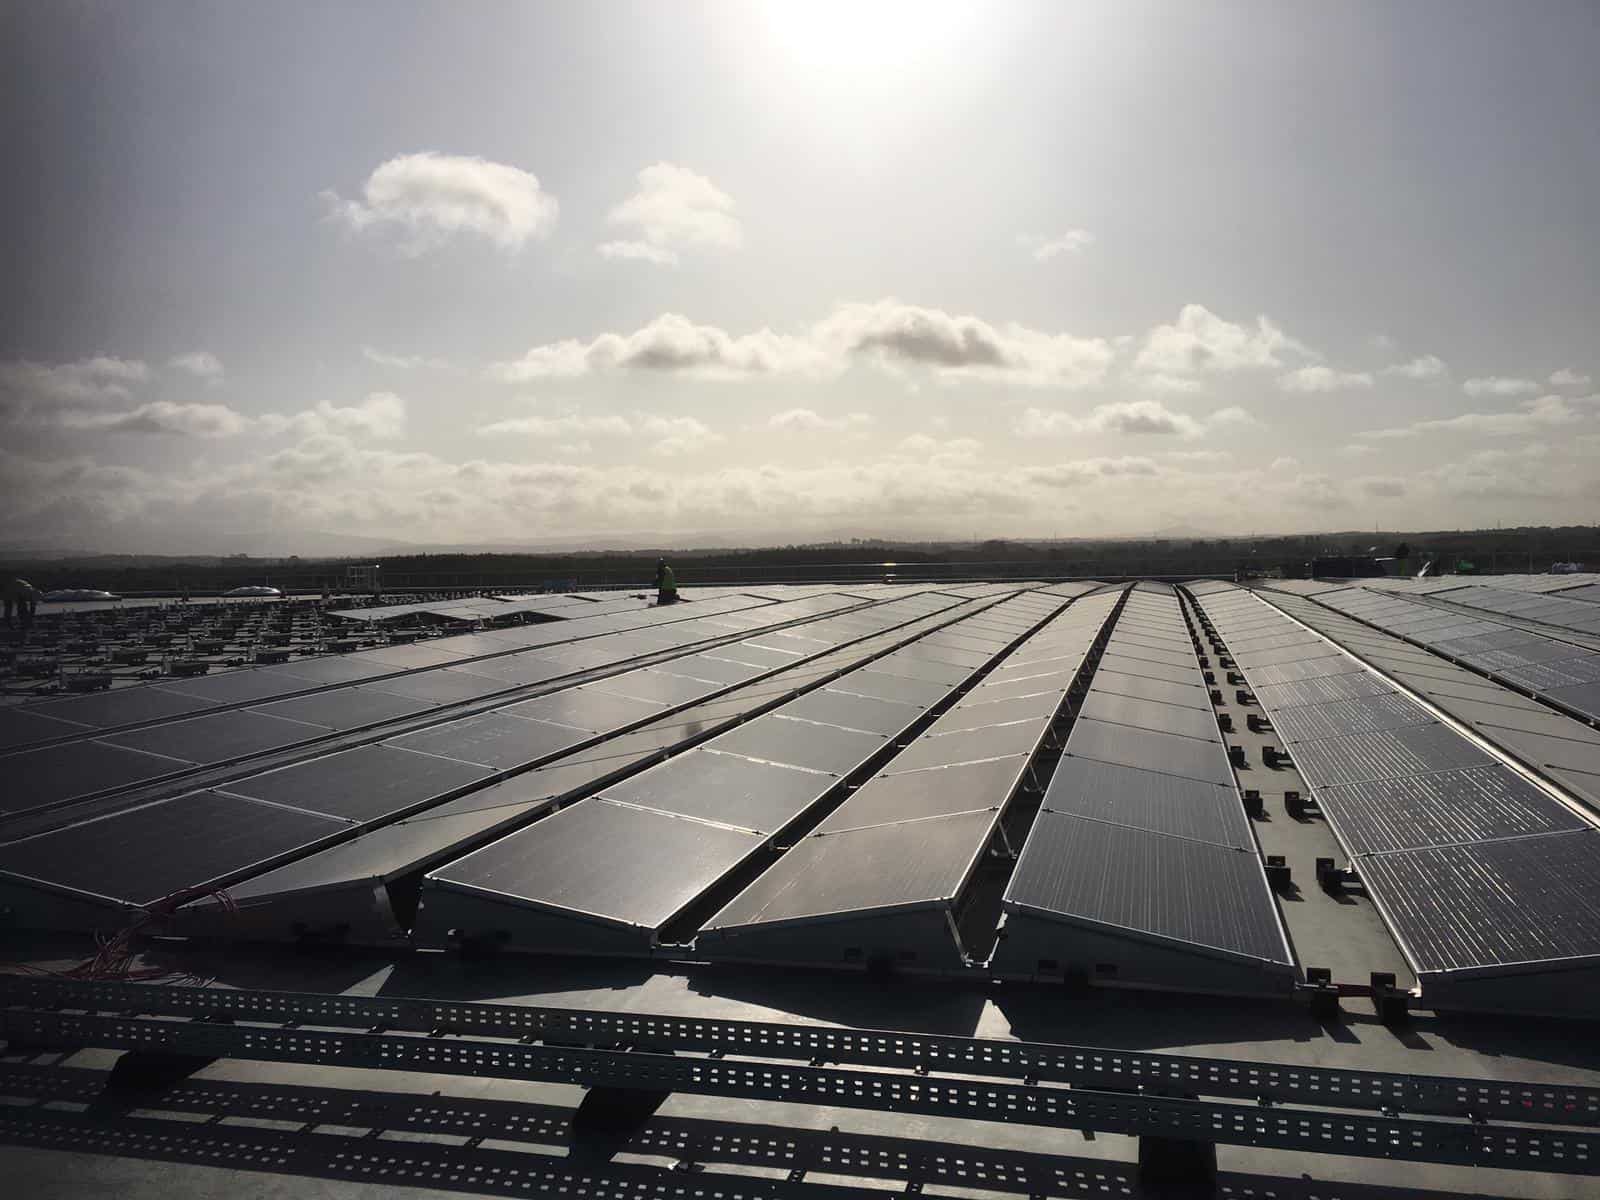 Rooftop Solar Panel